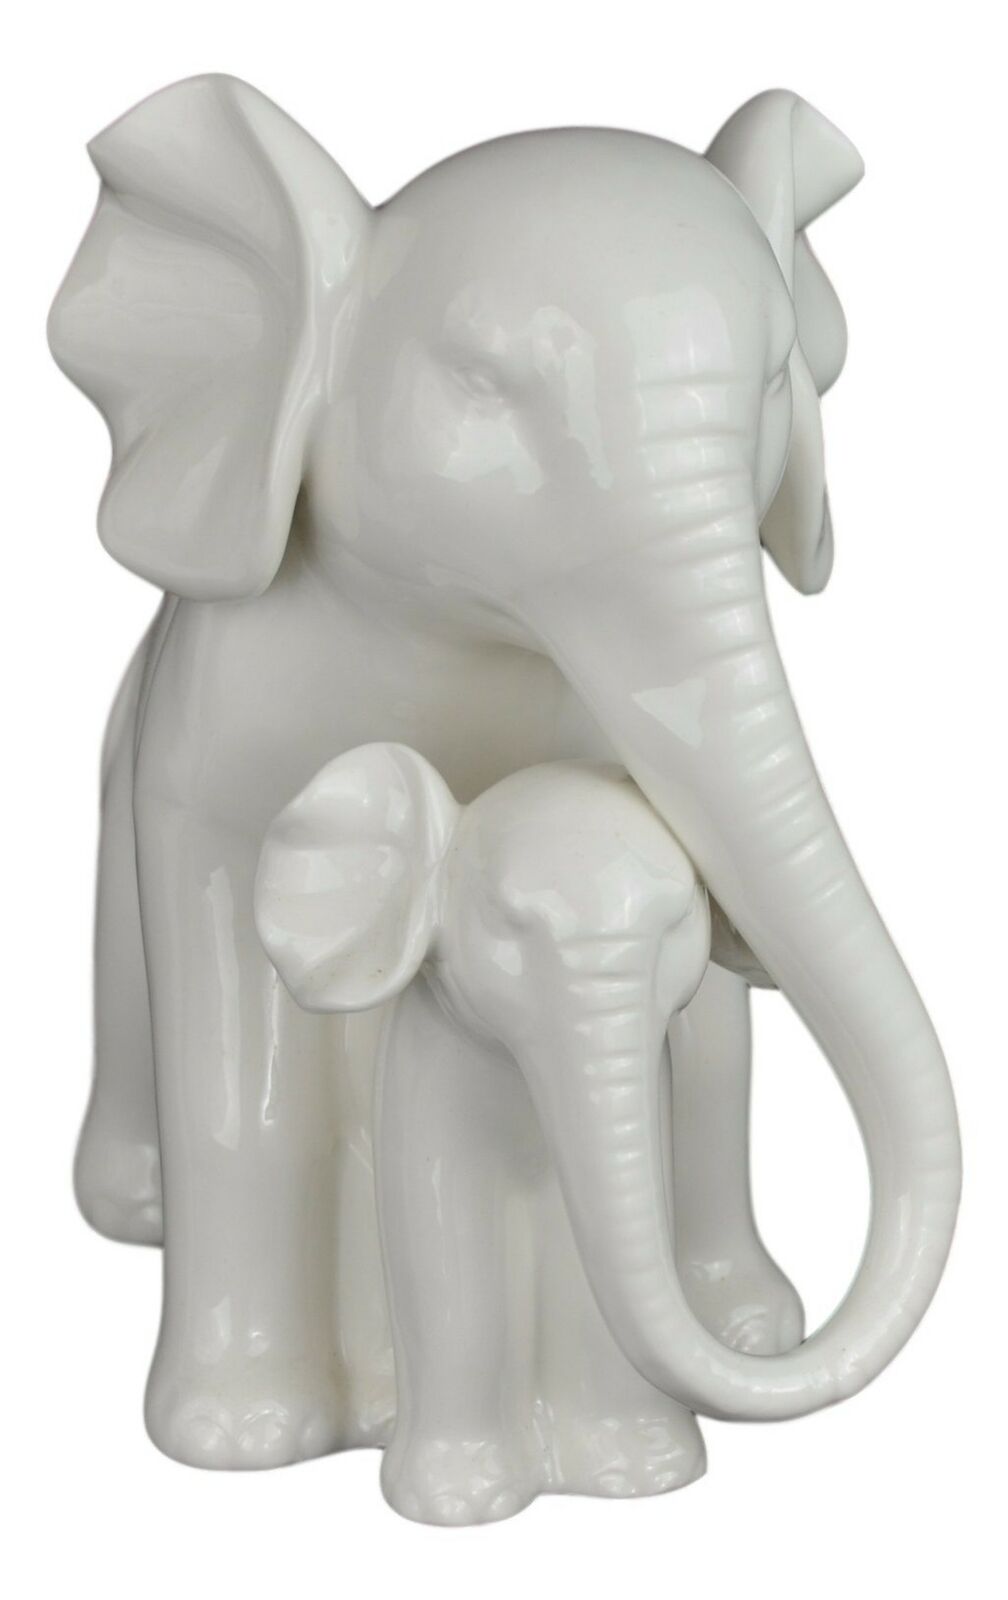 Festcool Porcelain Elephant Mother and Baby Elephant Statue/Figurine Whitewar...